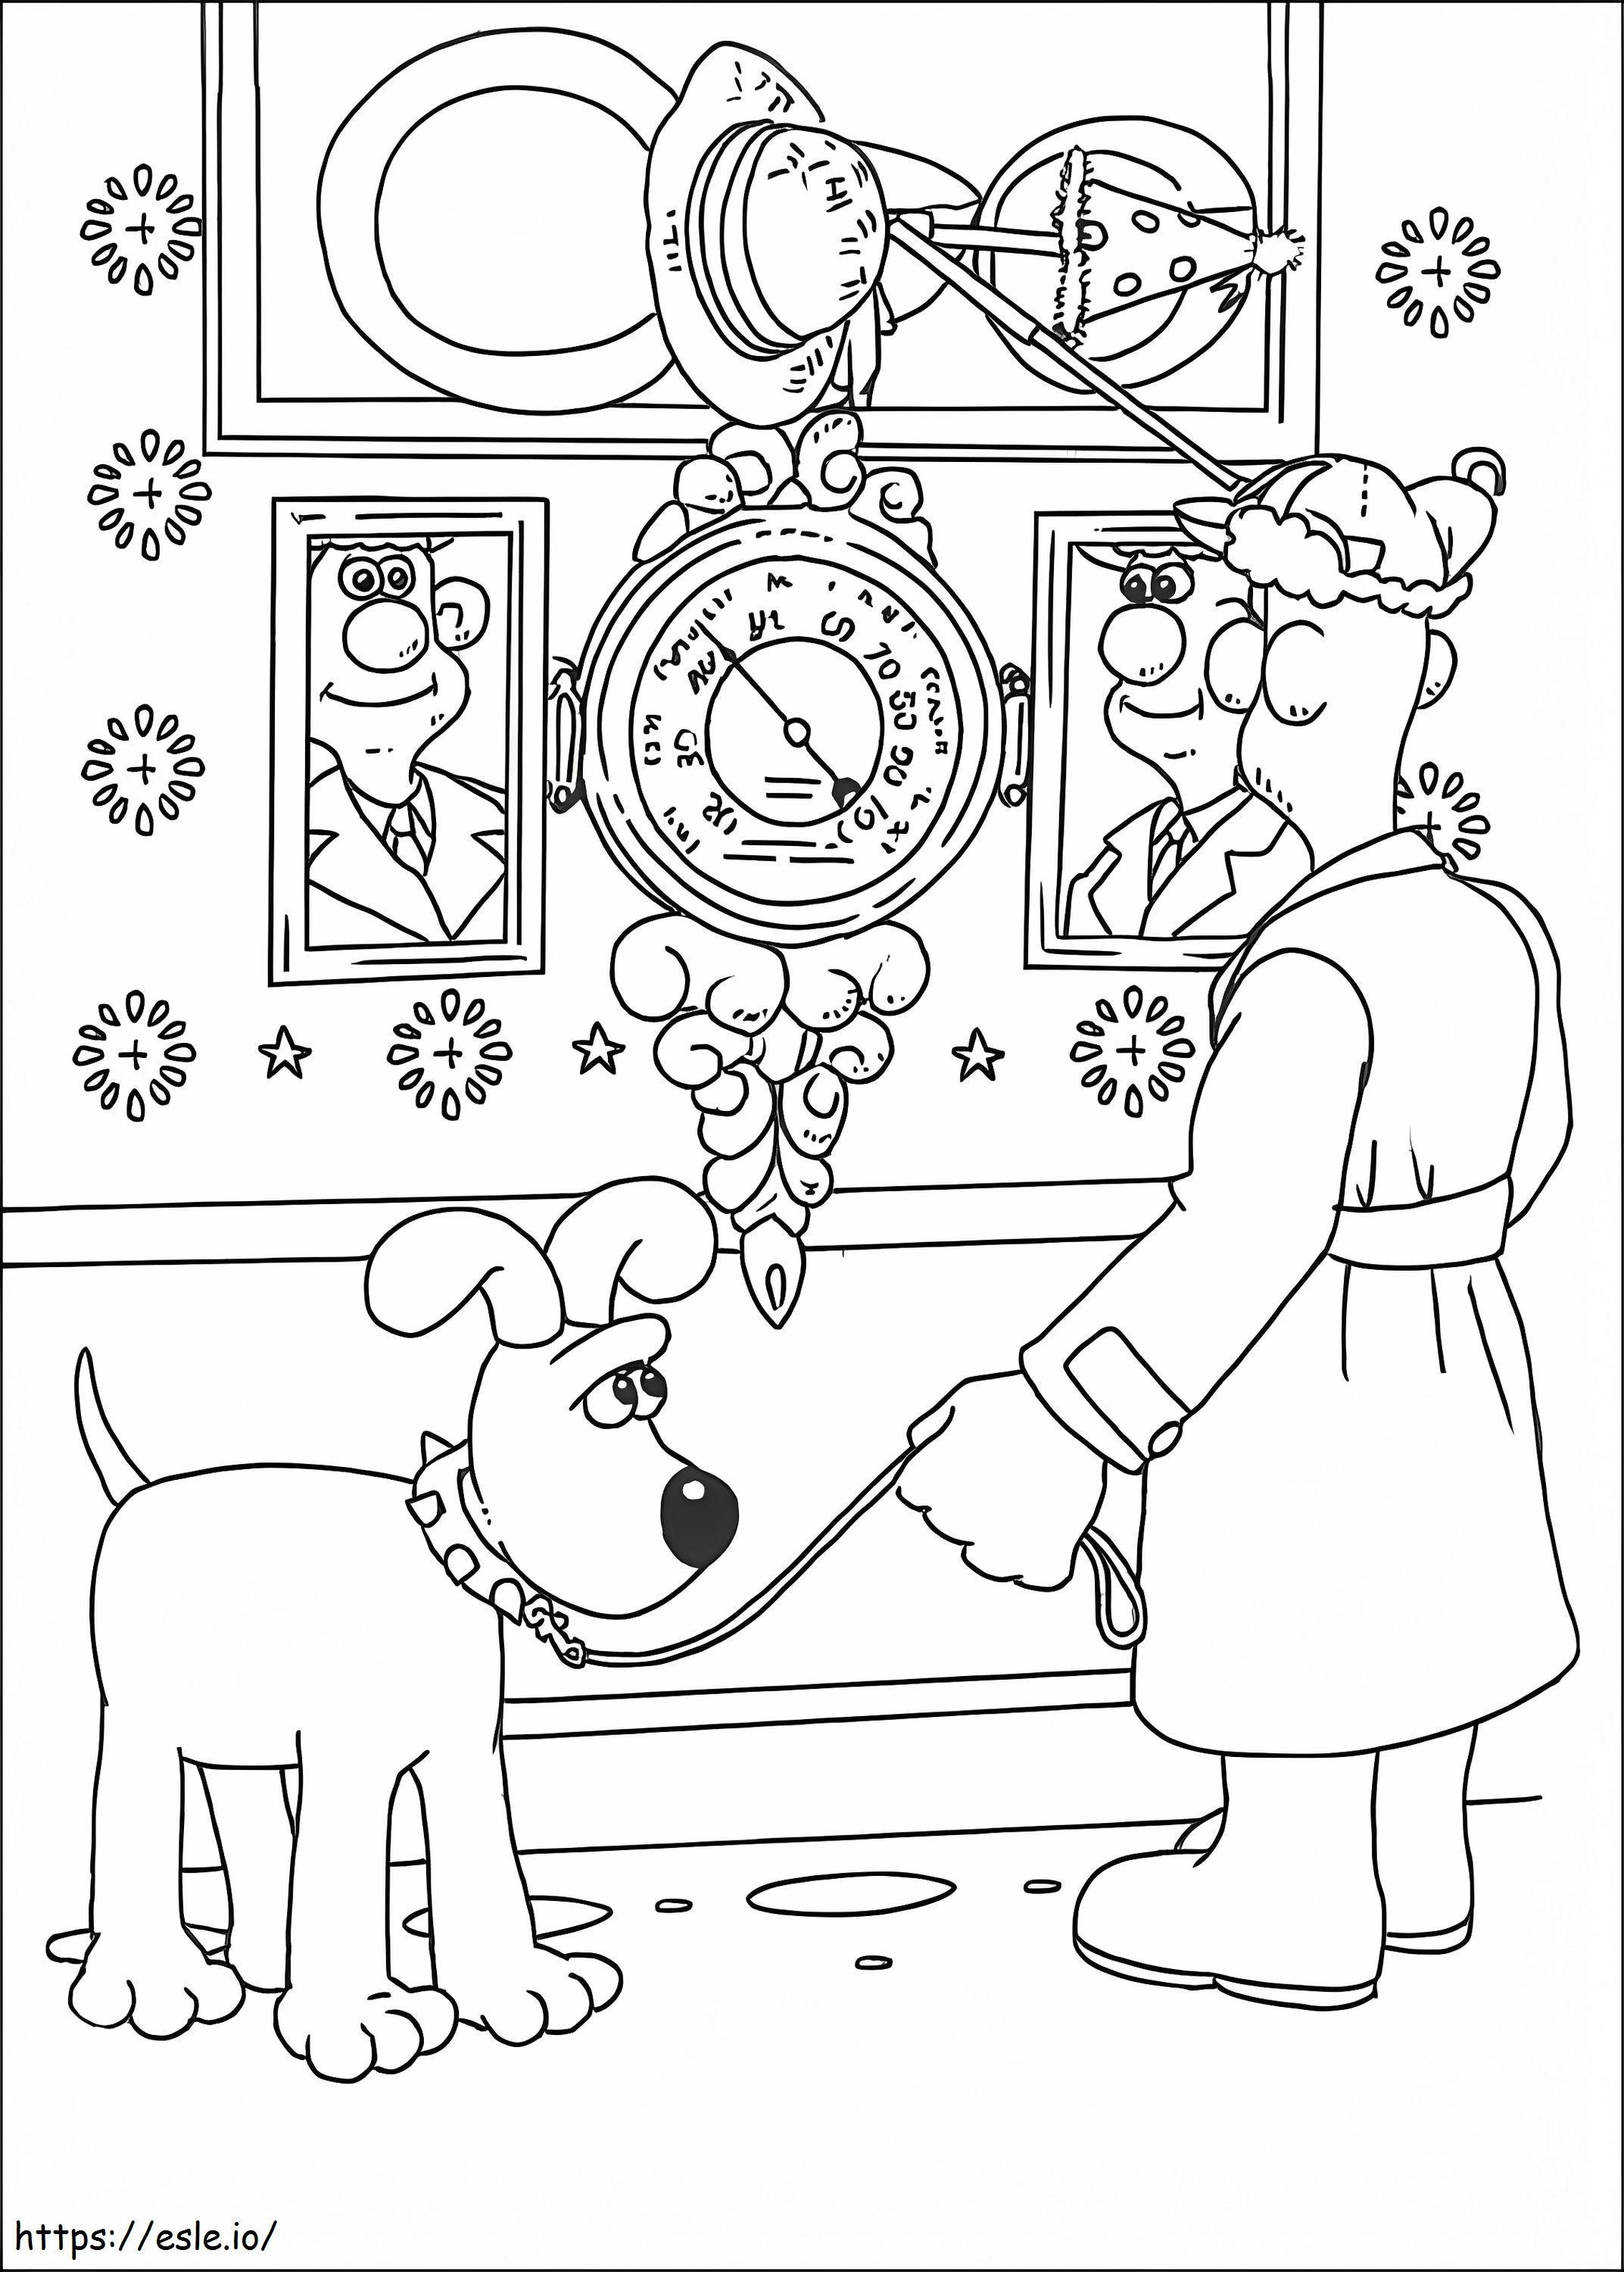 Wallace e Gromit para imprimir para colorir